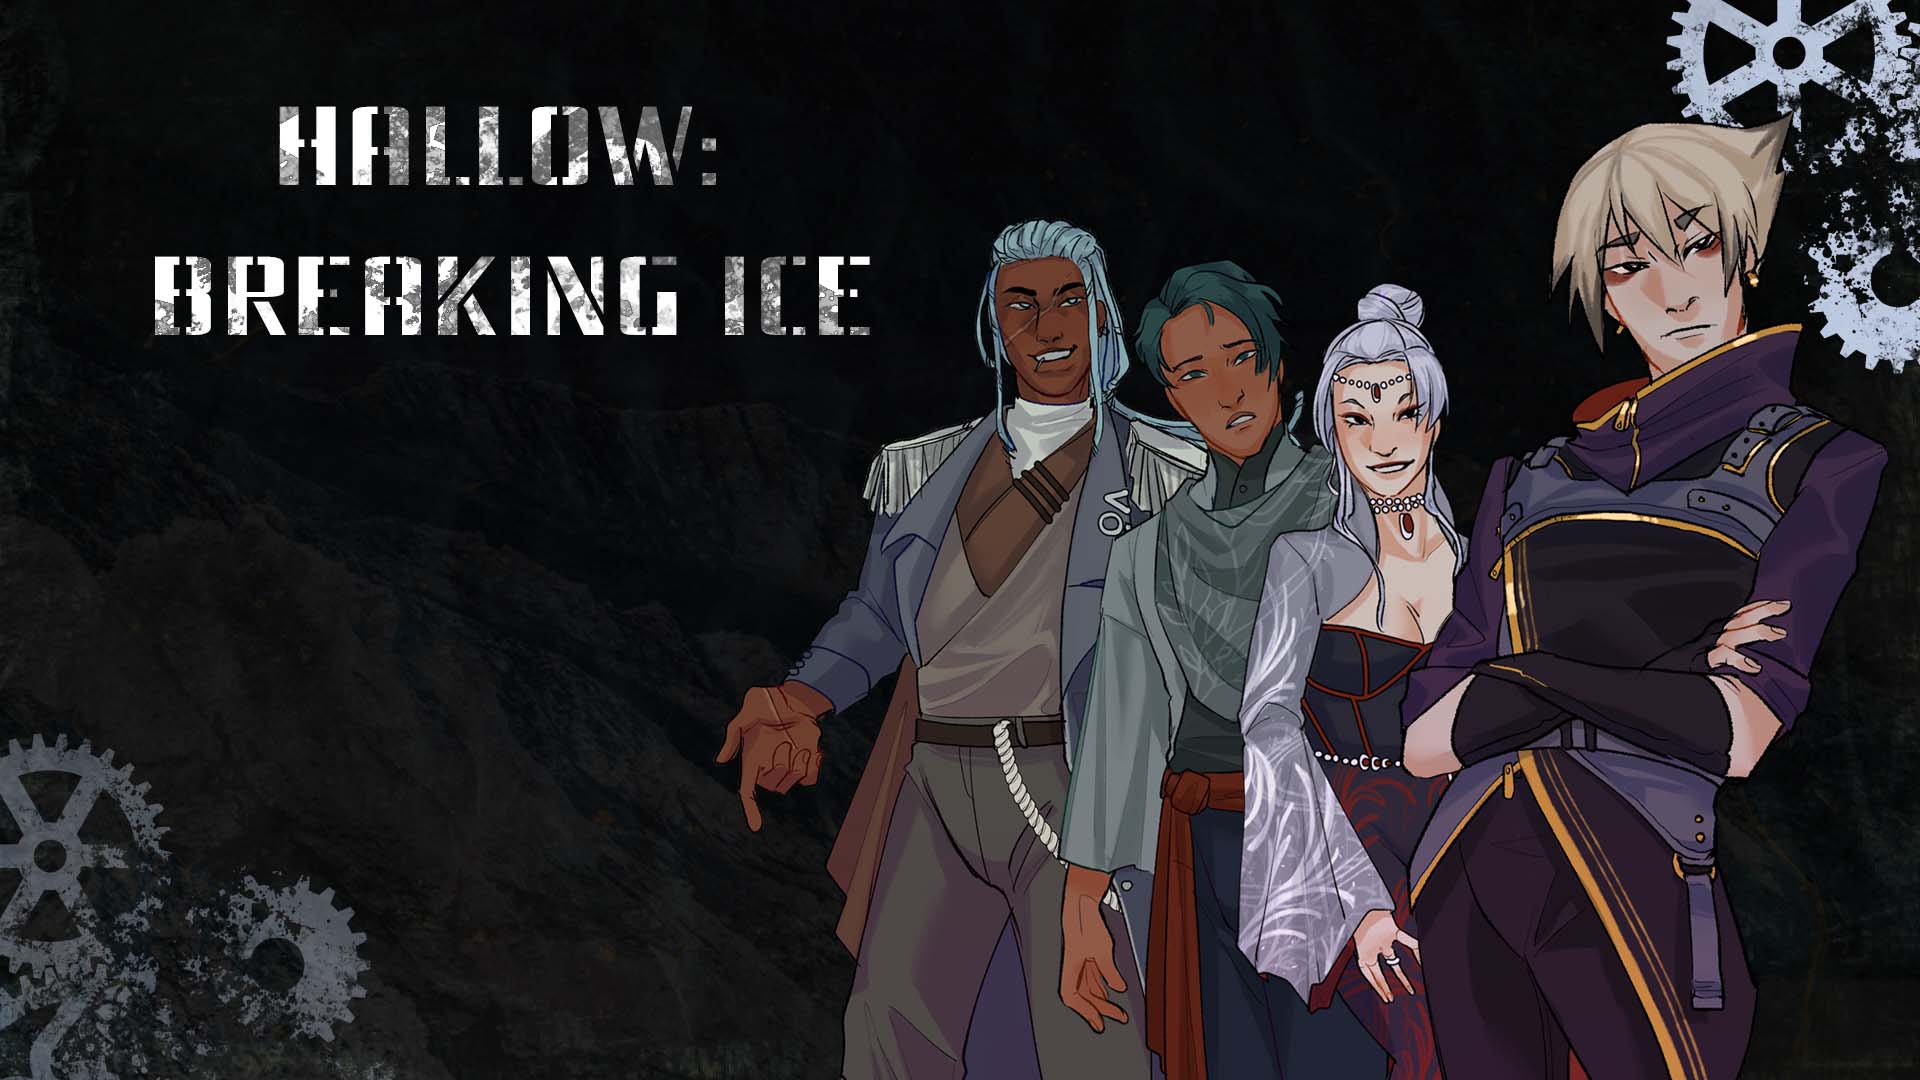 Hallow: Breaking Ice